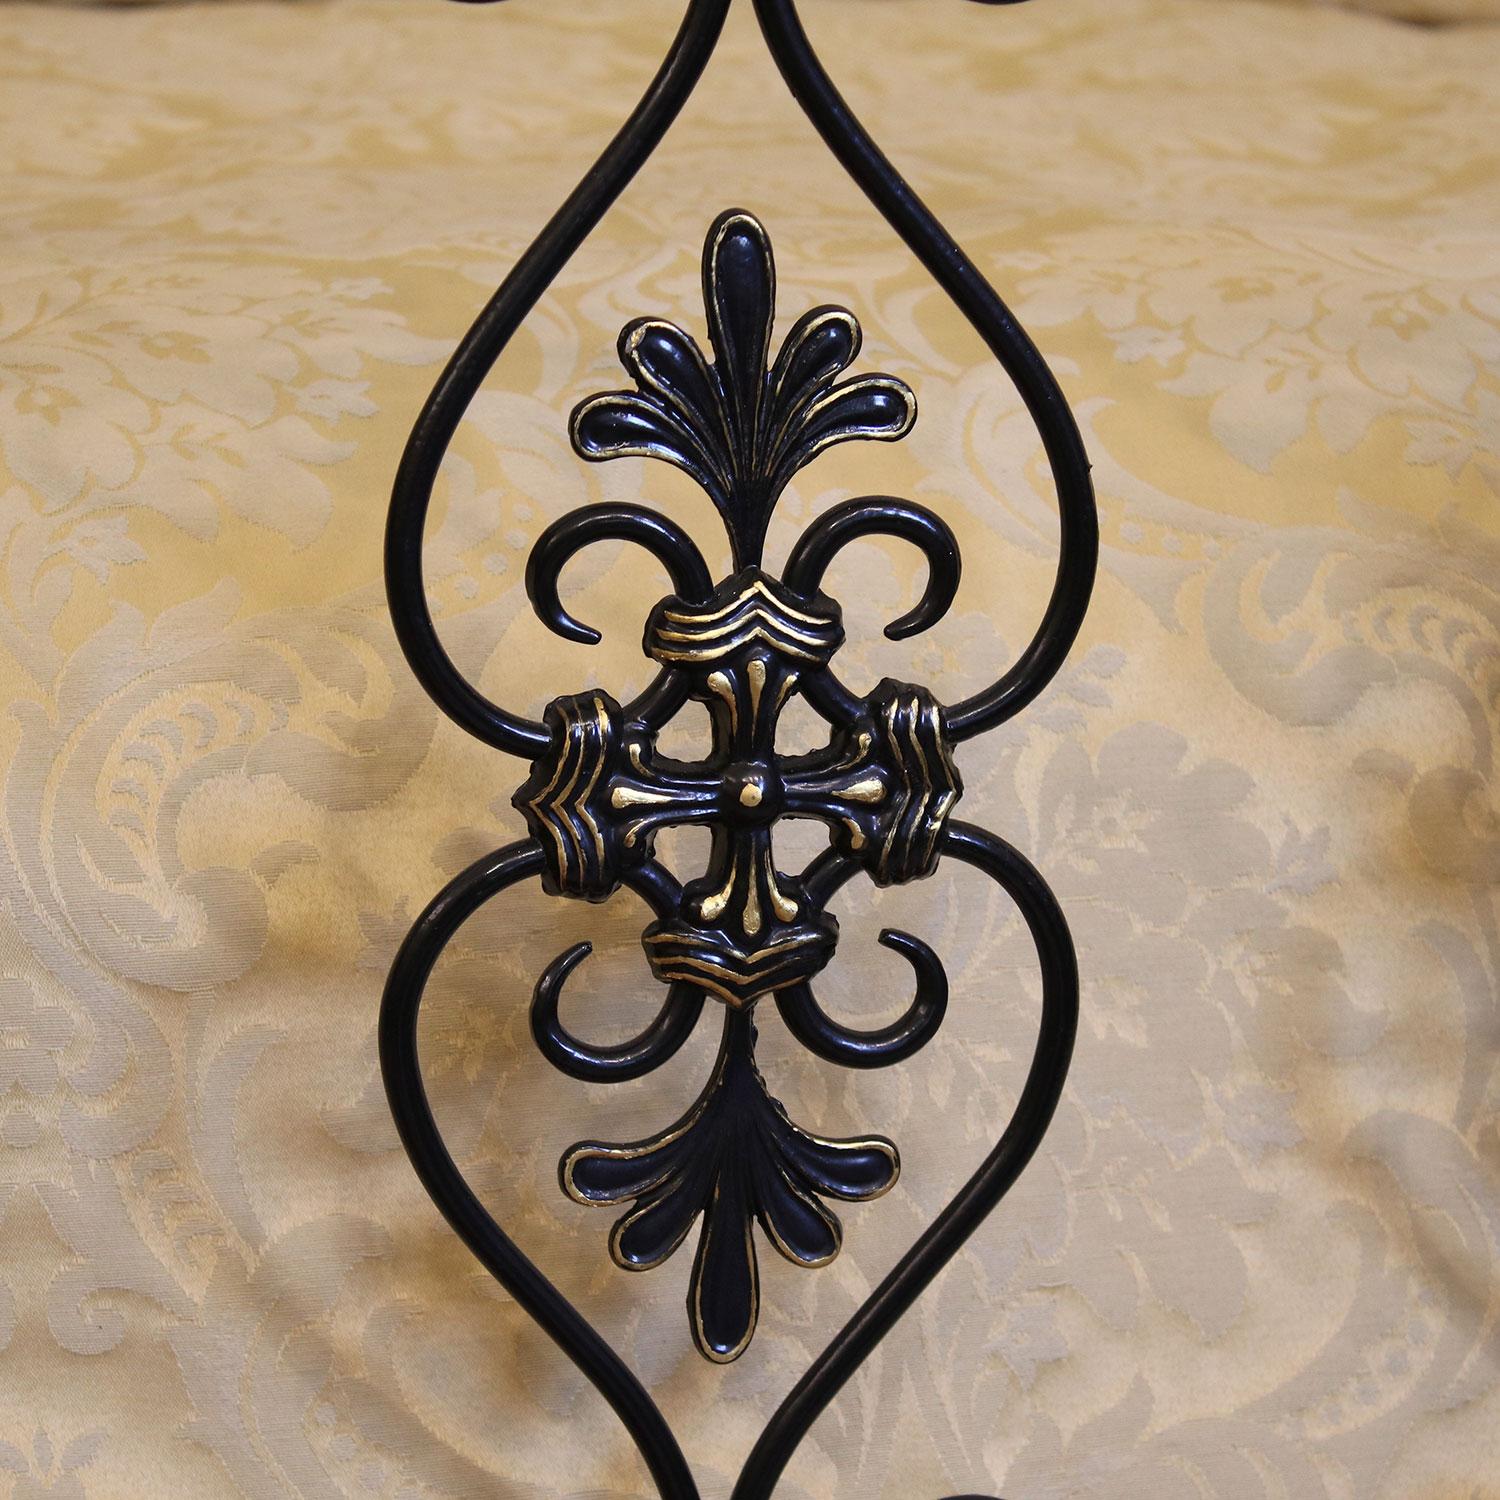 Decorative Cast Iron Bedstead in Black, MK155 1